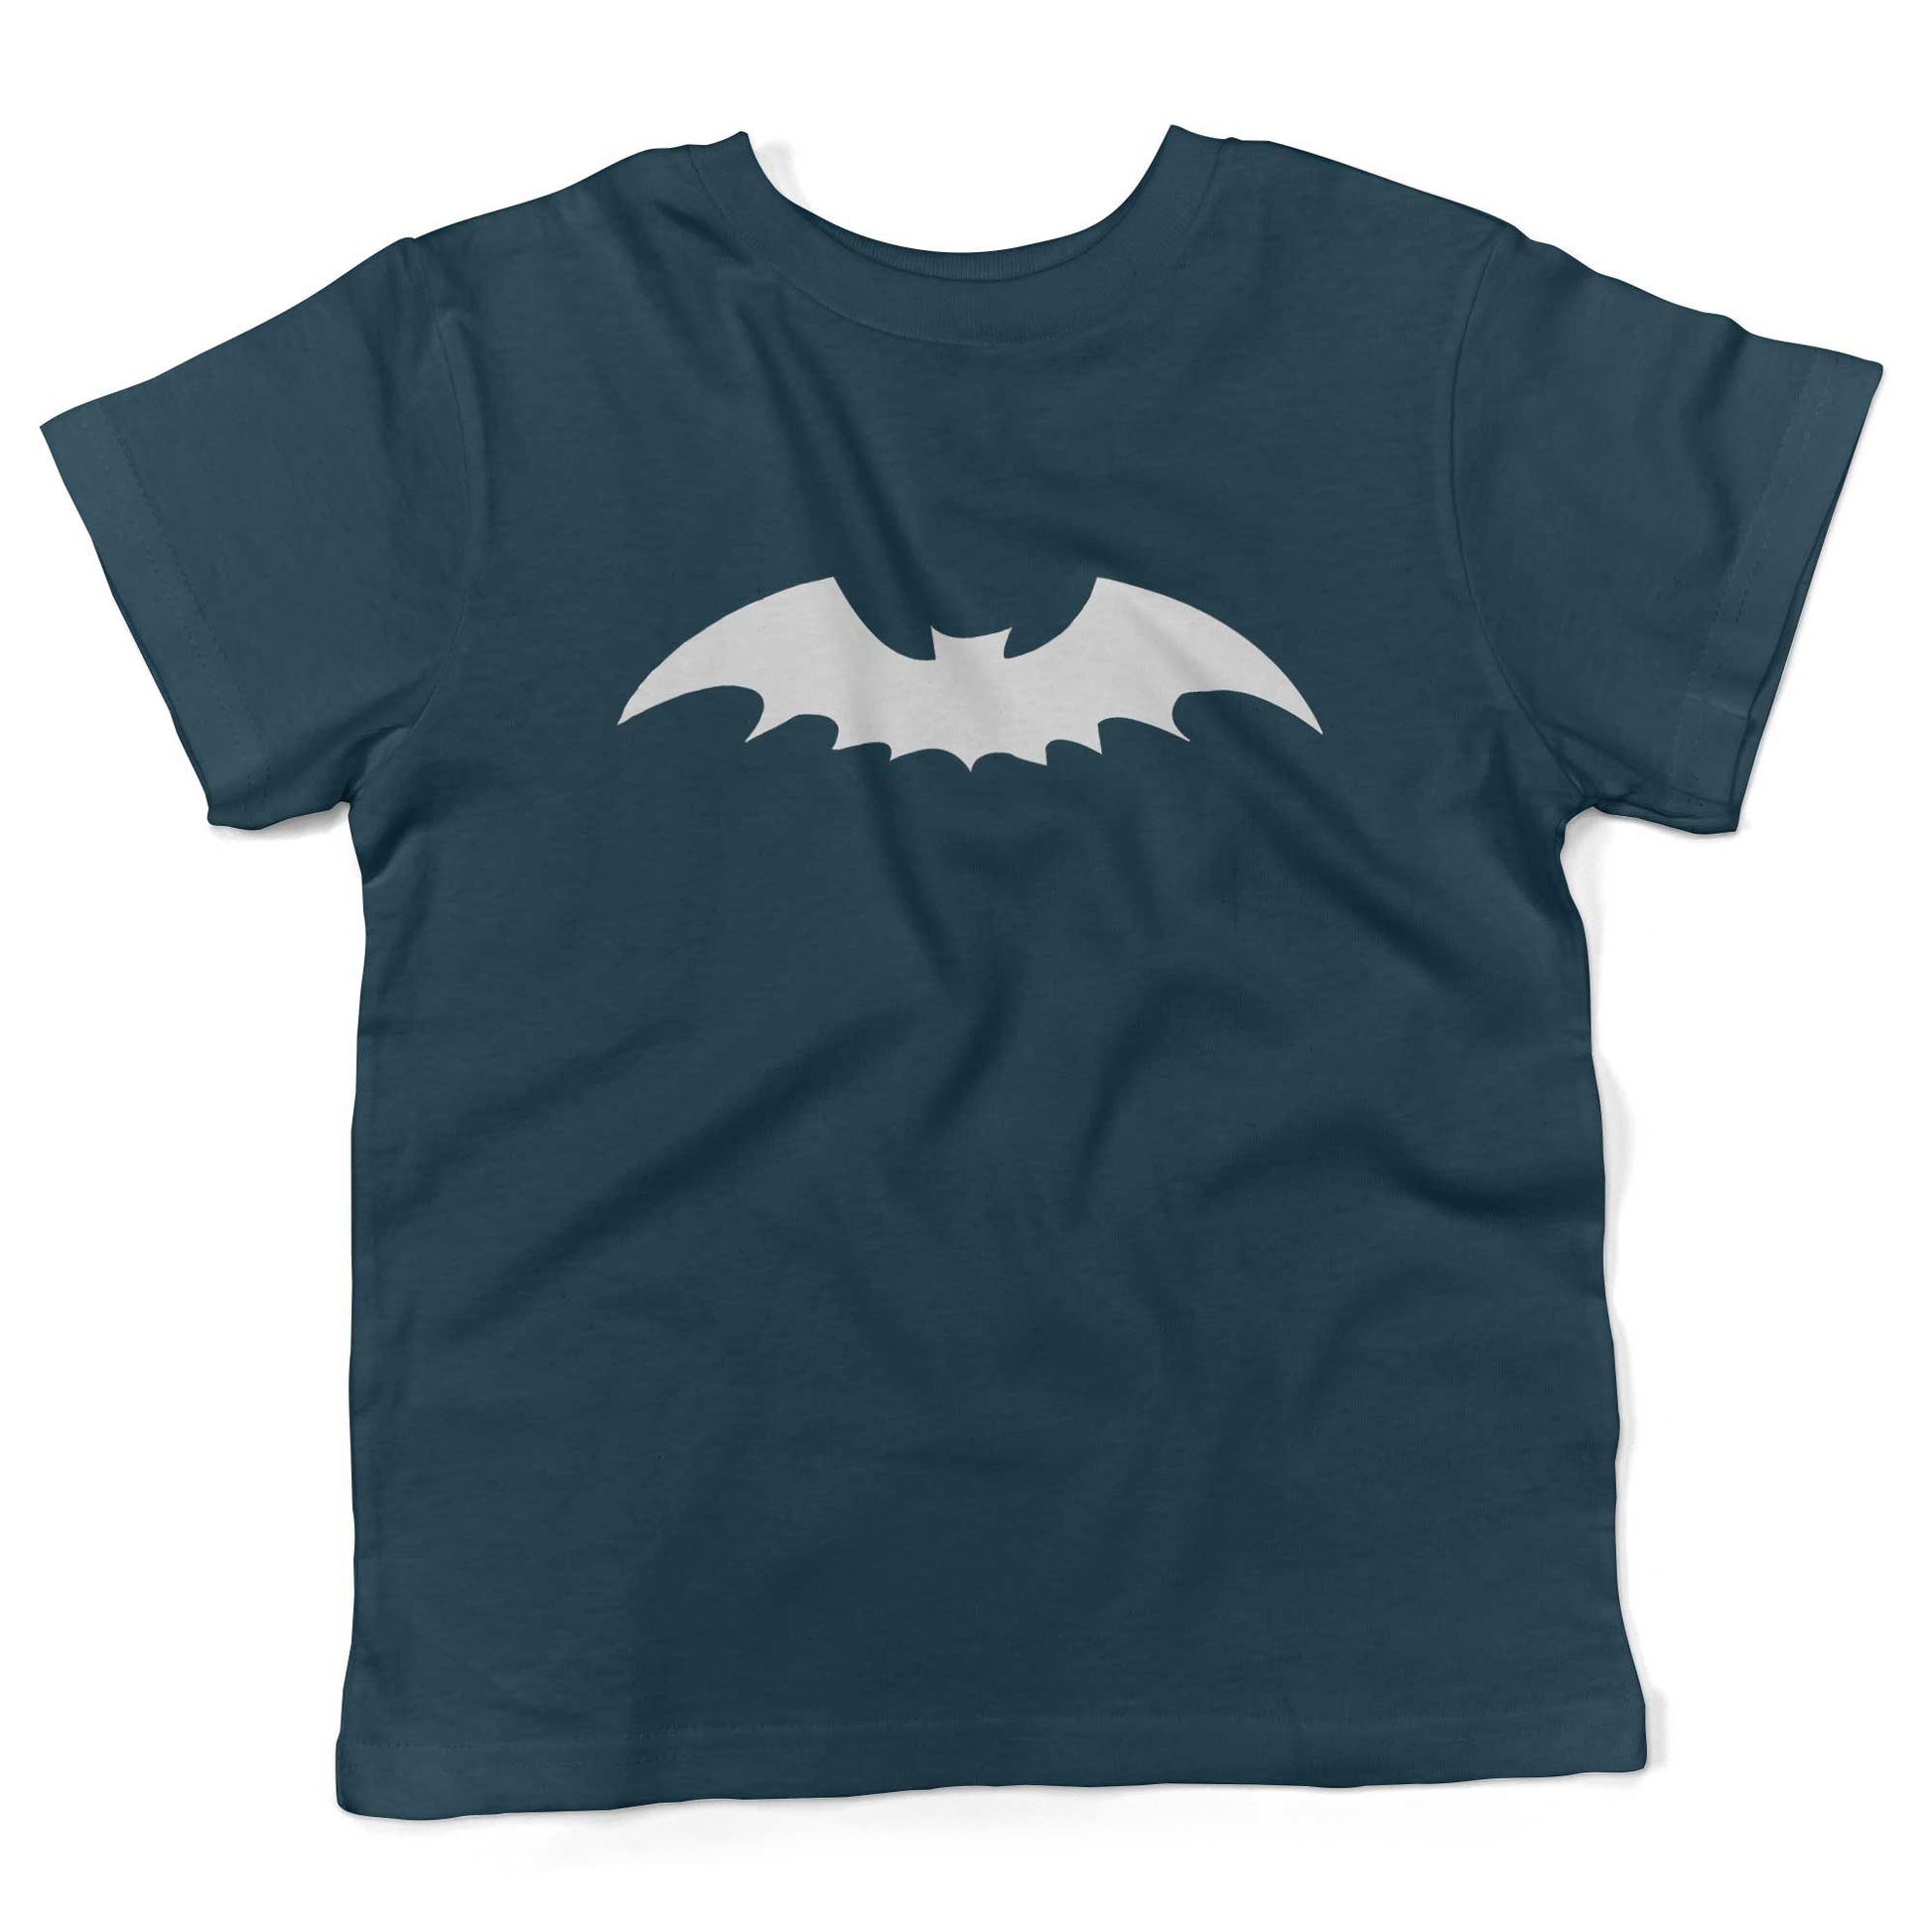 Gothic Bat Toddler Shirt-Organic Pacific Blue-2T